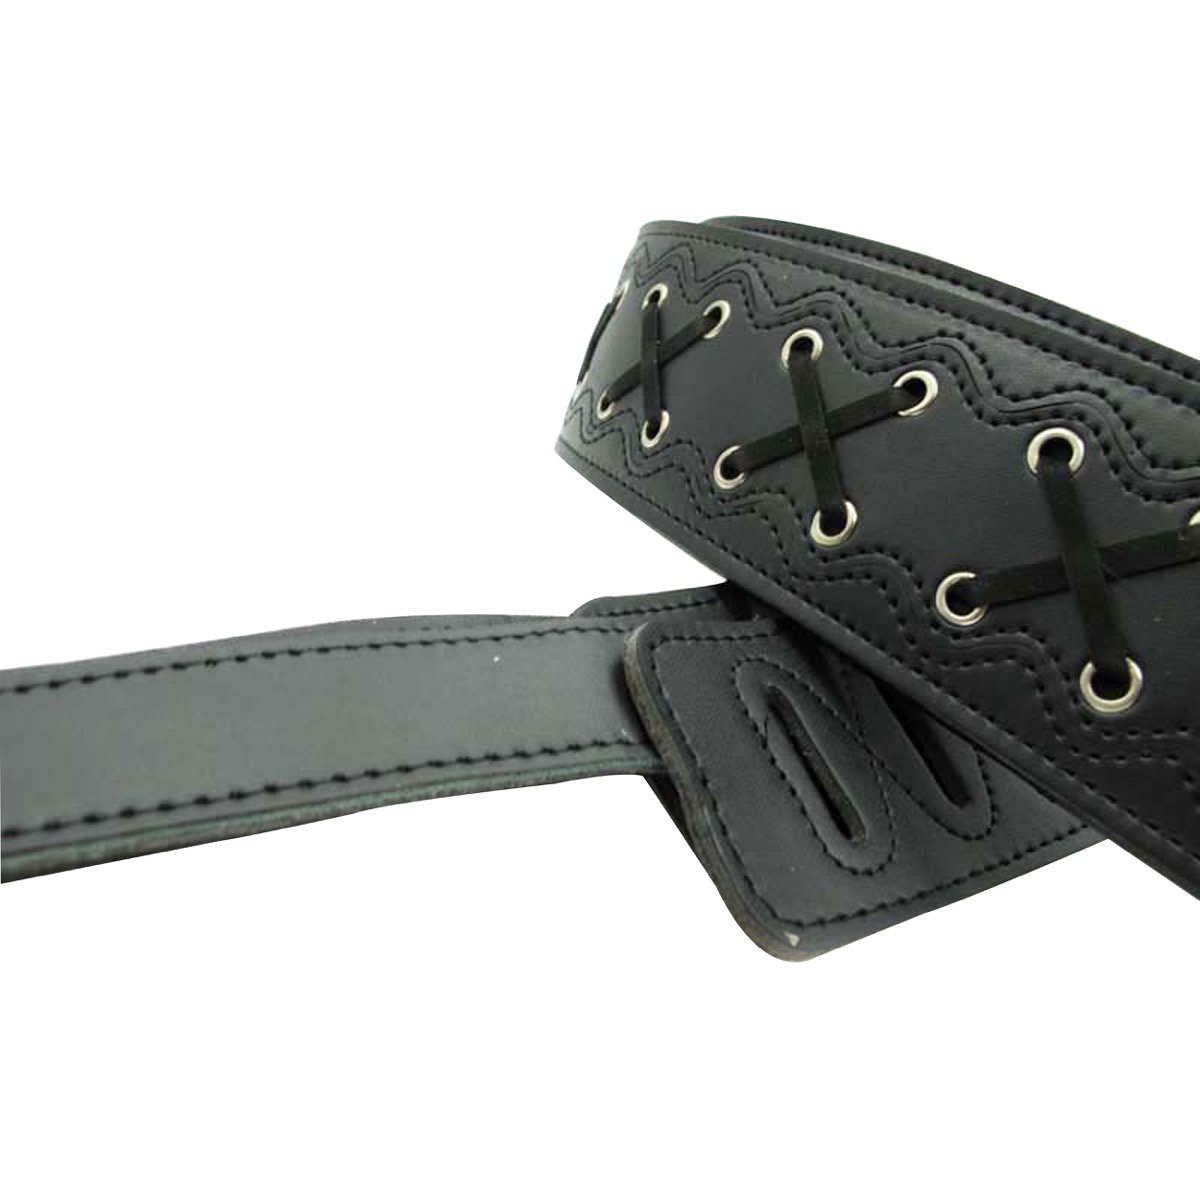 Vorson X Design Premium Leather Guitar Strap, Black